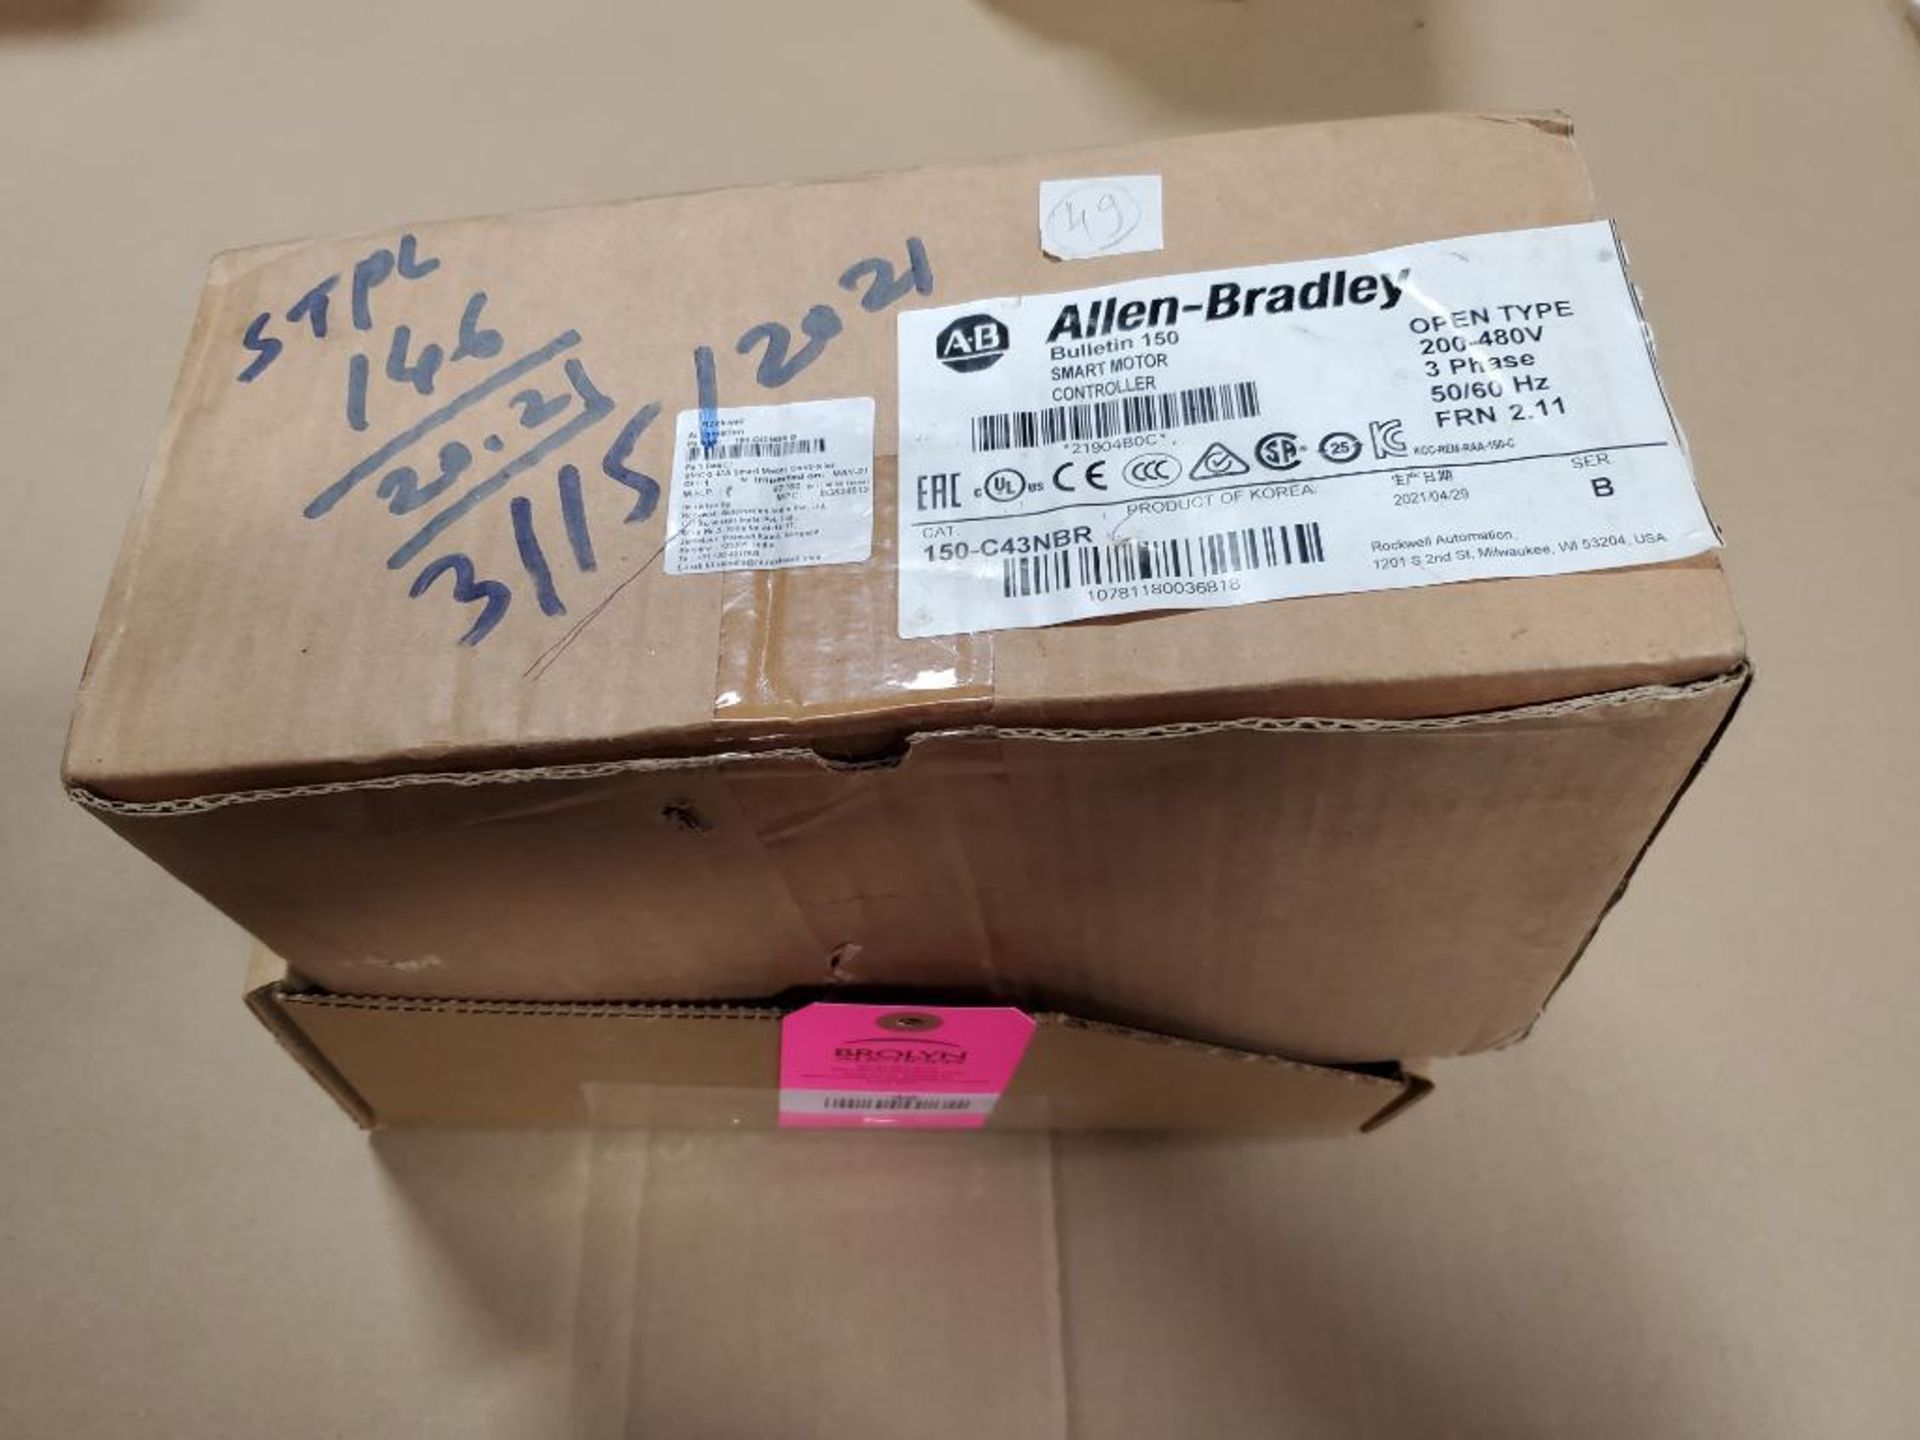 Allen Bradley smart motor controller 150-C43NBR. New in box. - Image 2 of 11